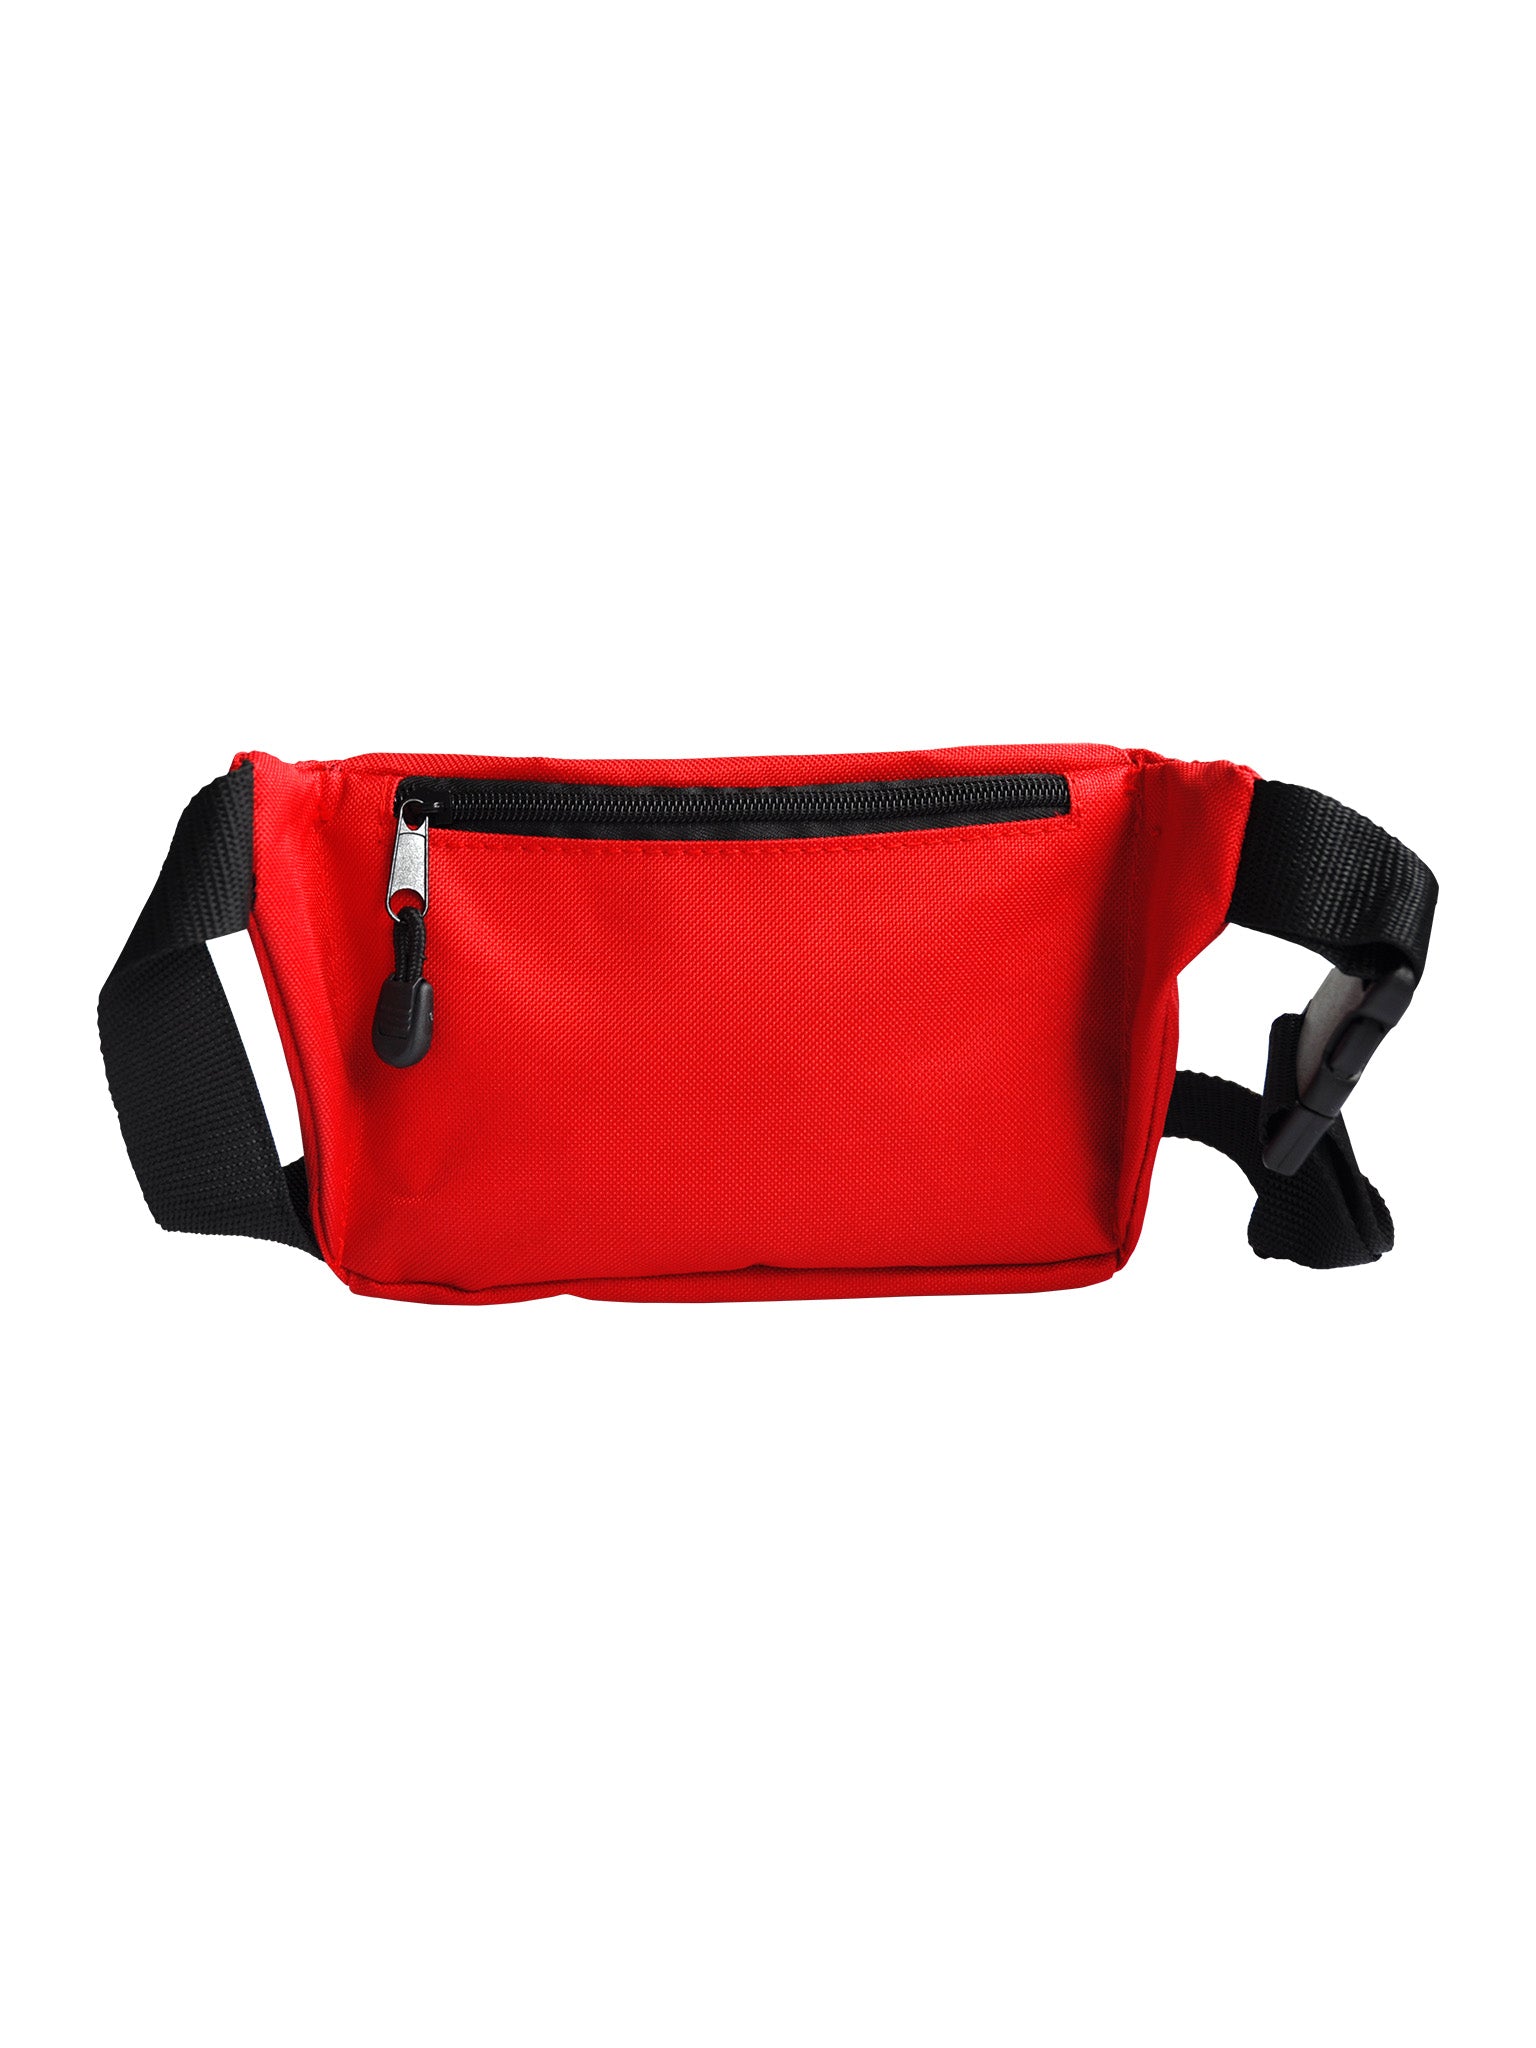 Lifeguard Hip Pack - Red